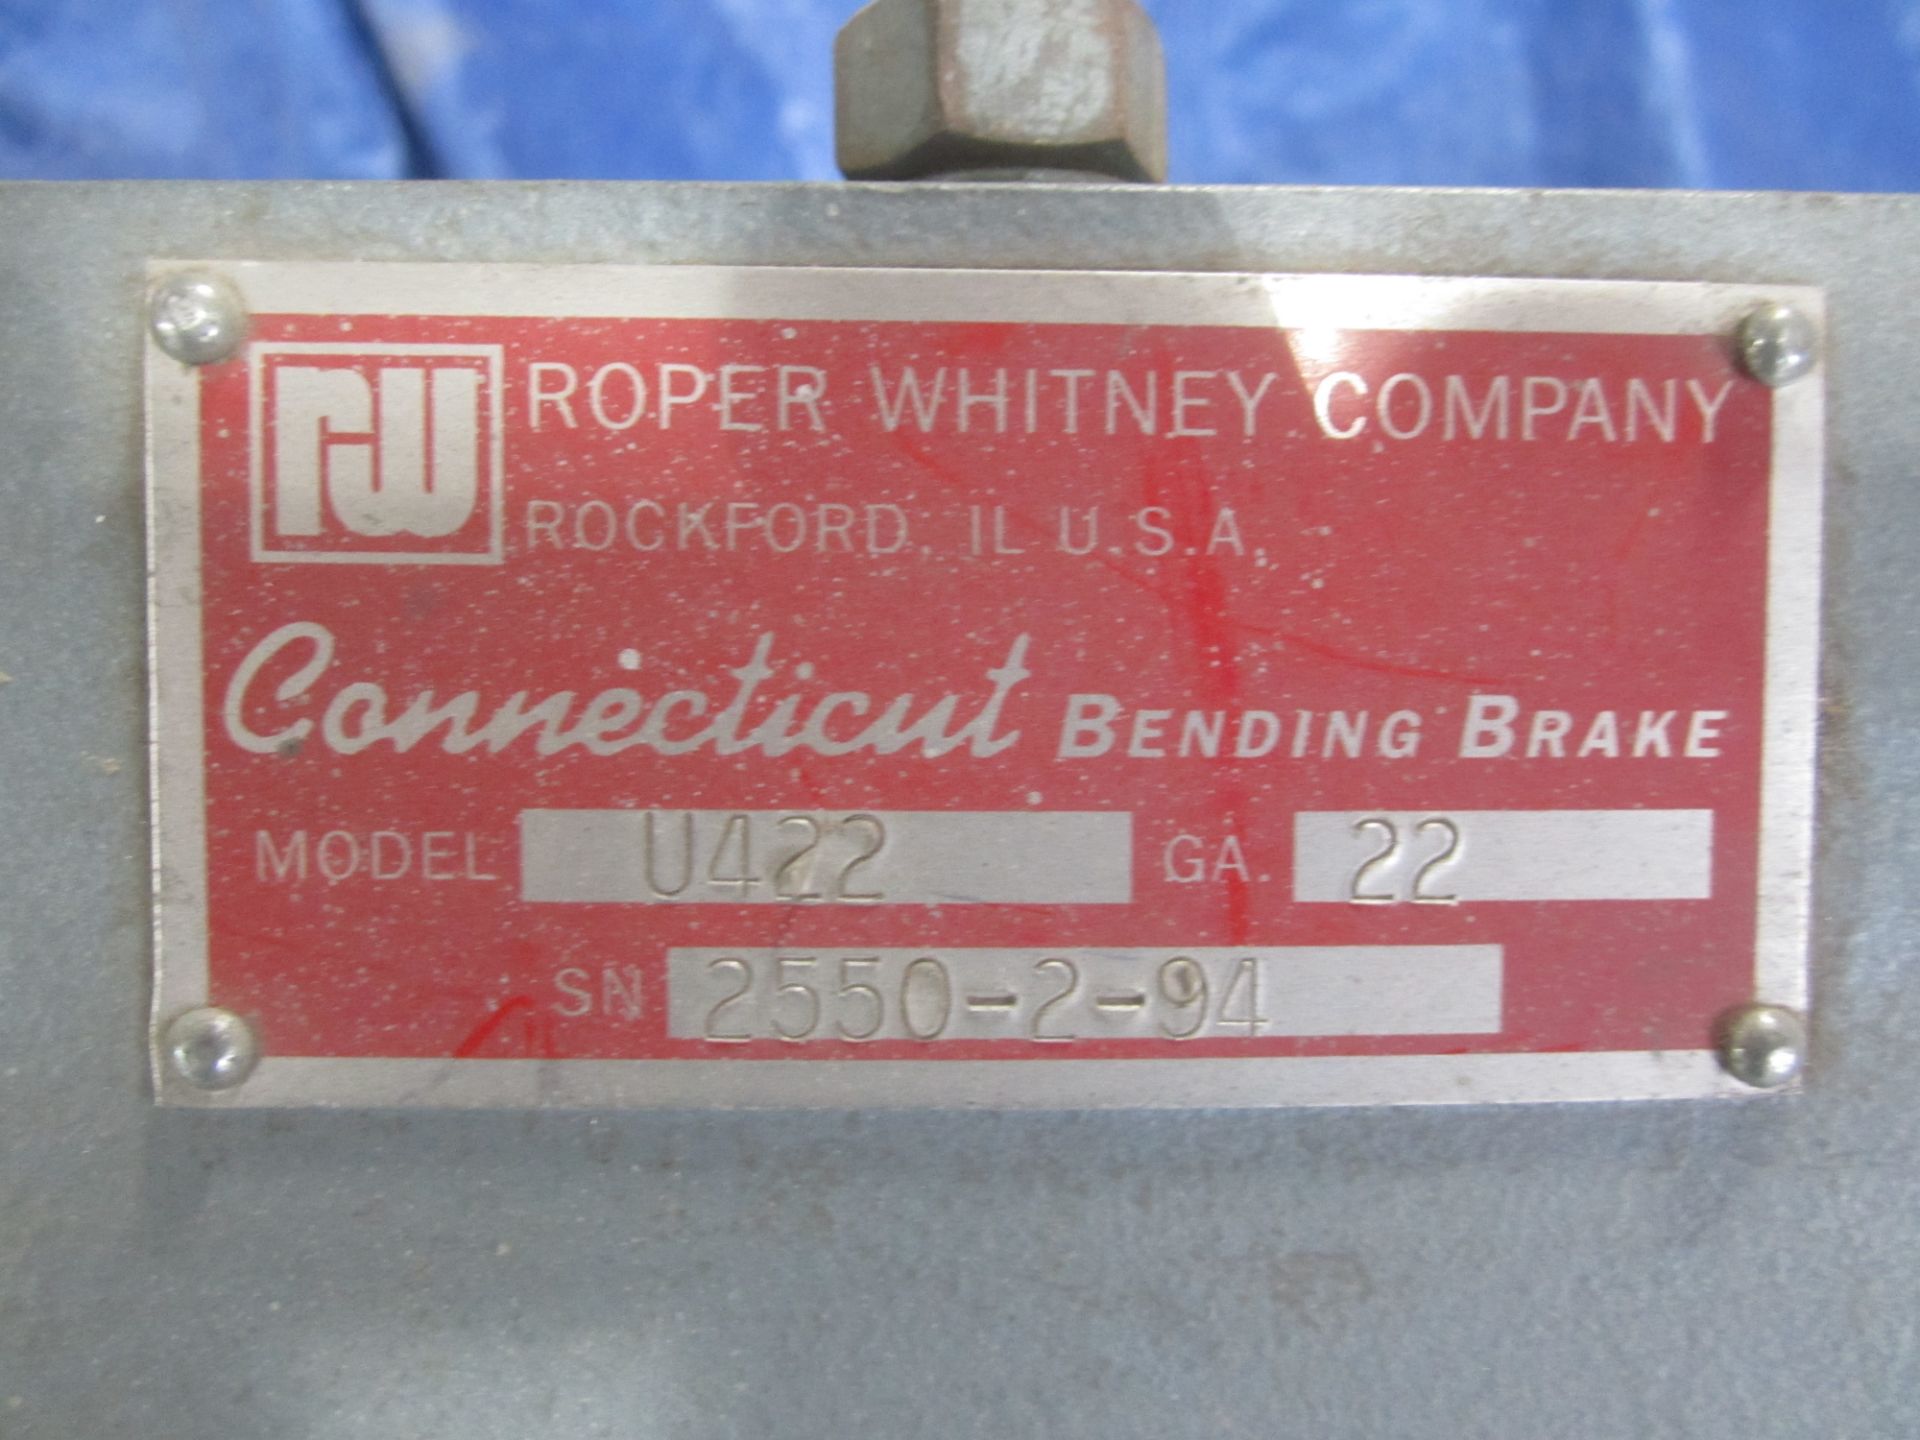 Roper Whitney/Connecticut Model U422 Box and Pan Brake, s/n 2550-2-94, 4' X 22 Gauge Capacity, - Image 4 of 4